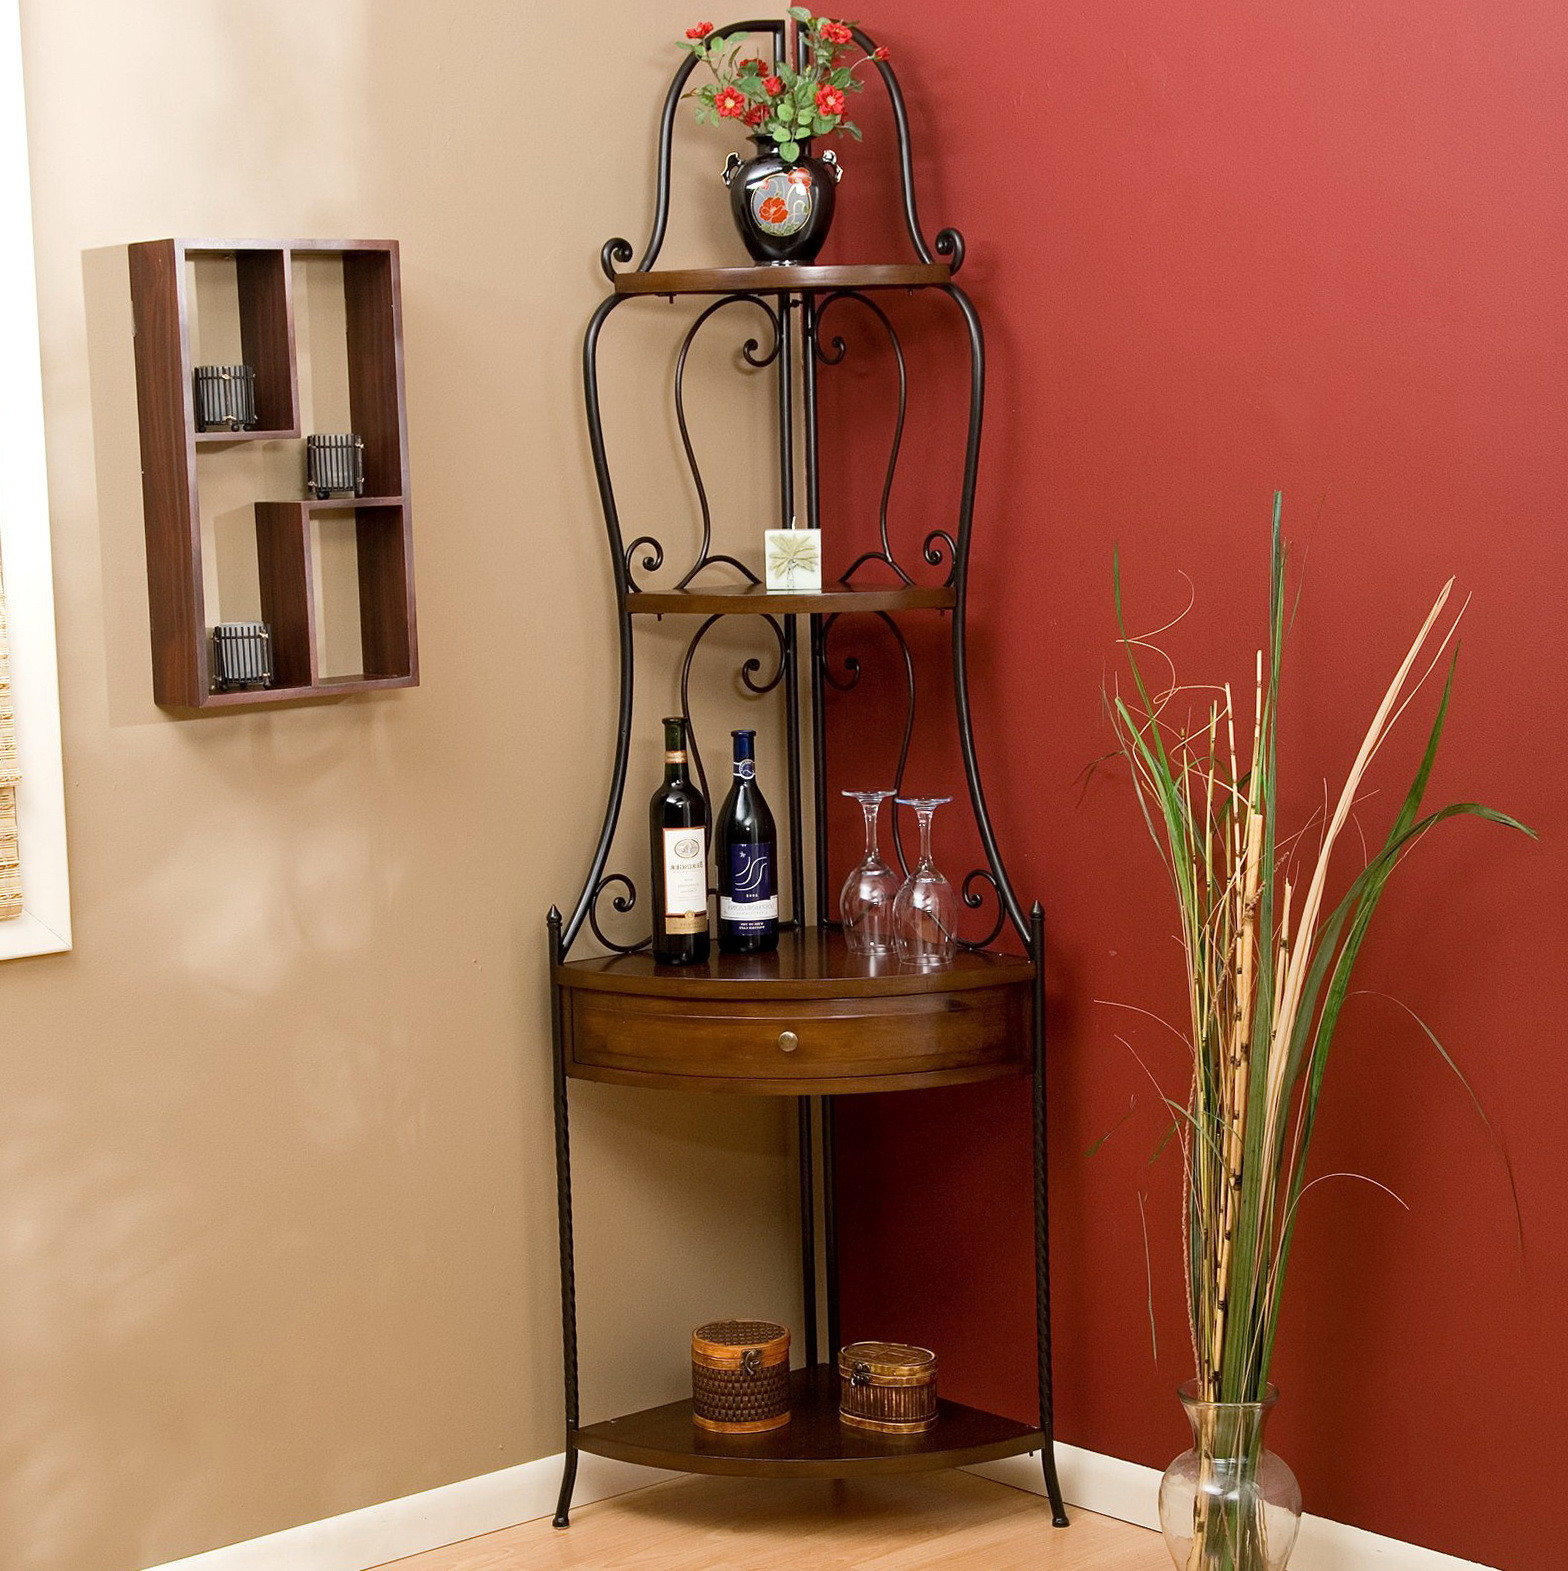 Best ideas about Corner Wine Rack Furniture
. Save or Pin Corner Wine Rack Furniture Now.